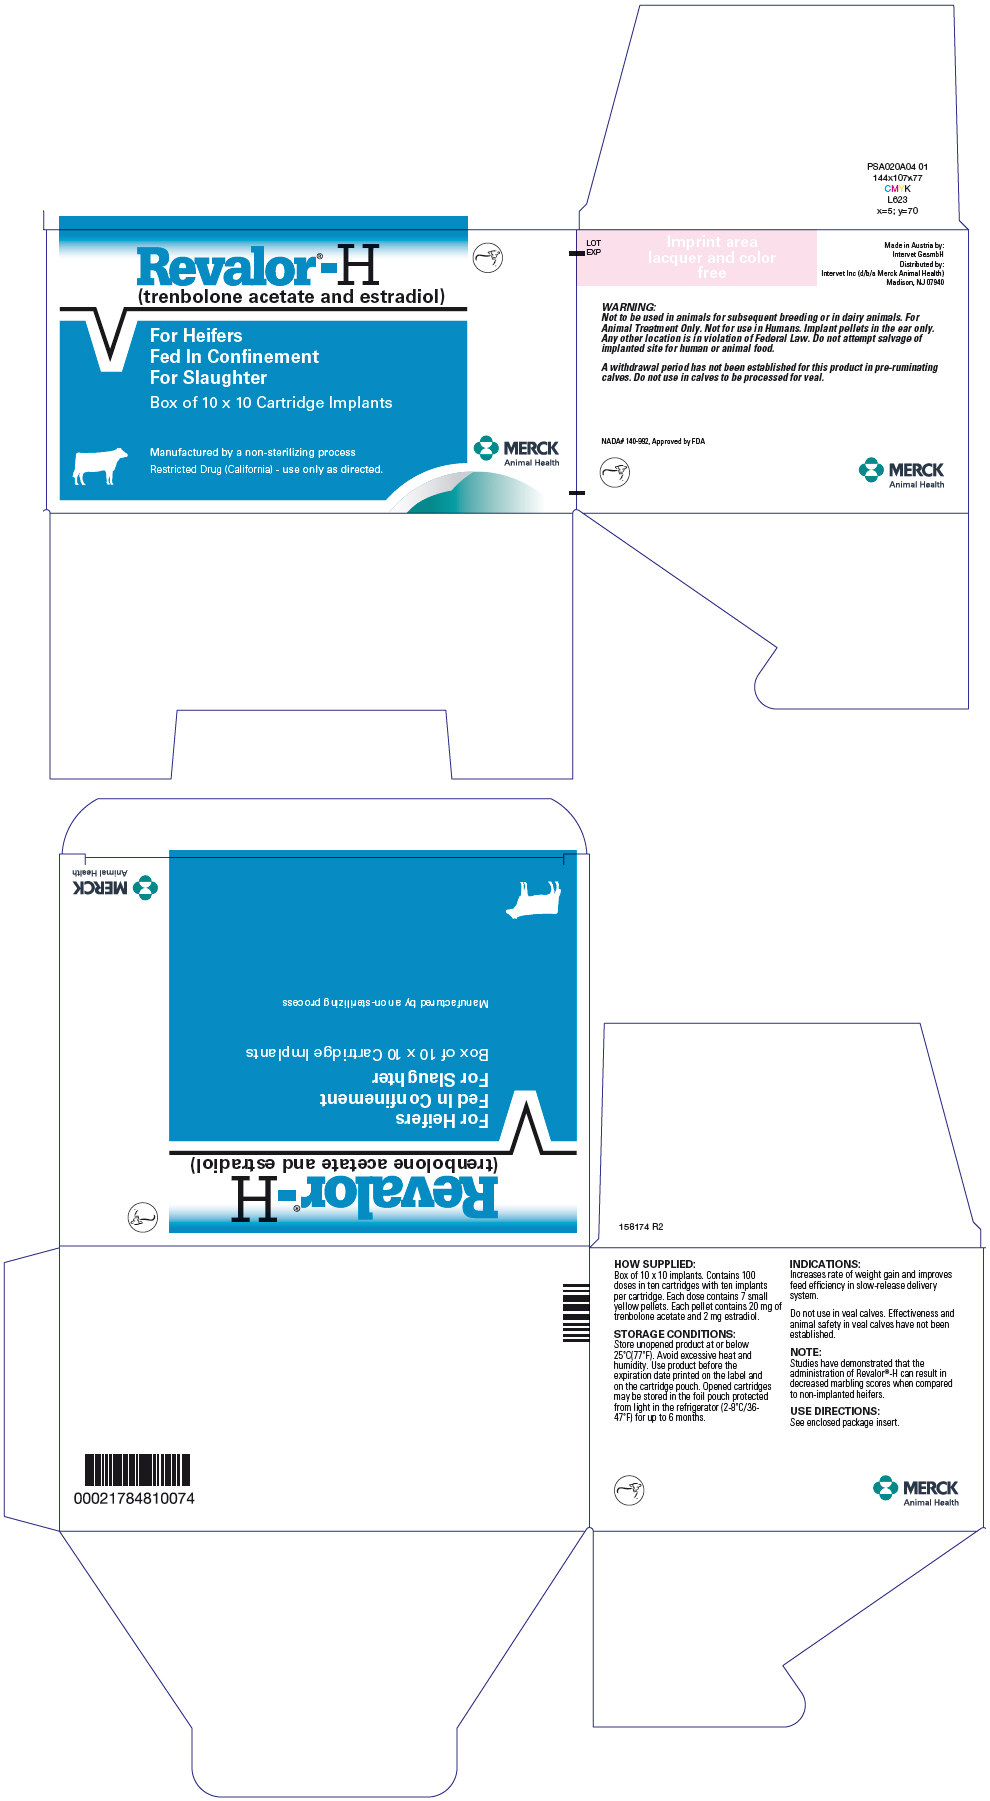 PRINCIPAL DISPLAY PANEL - 10 x 10 Cartridge Implants Carton